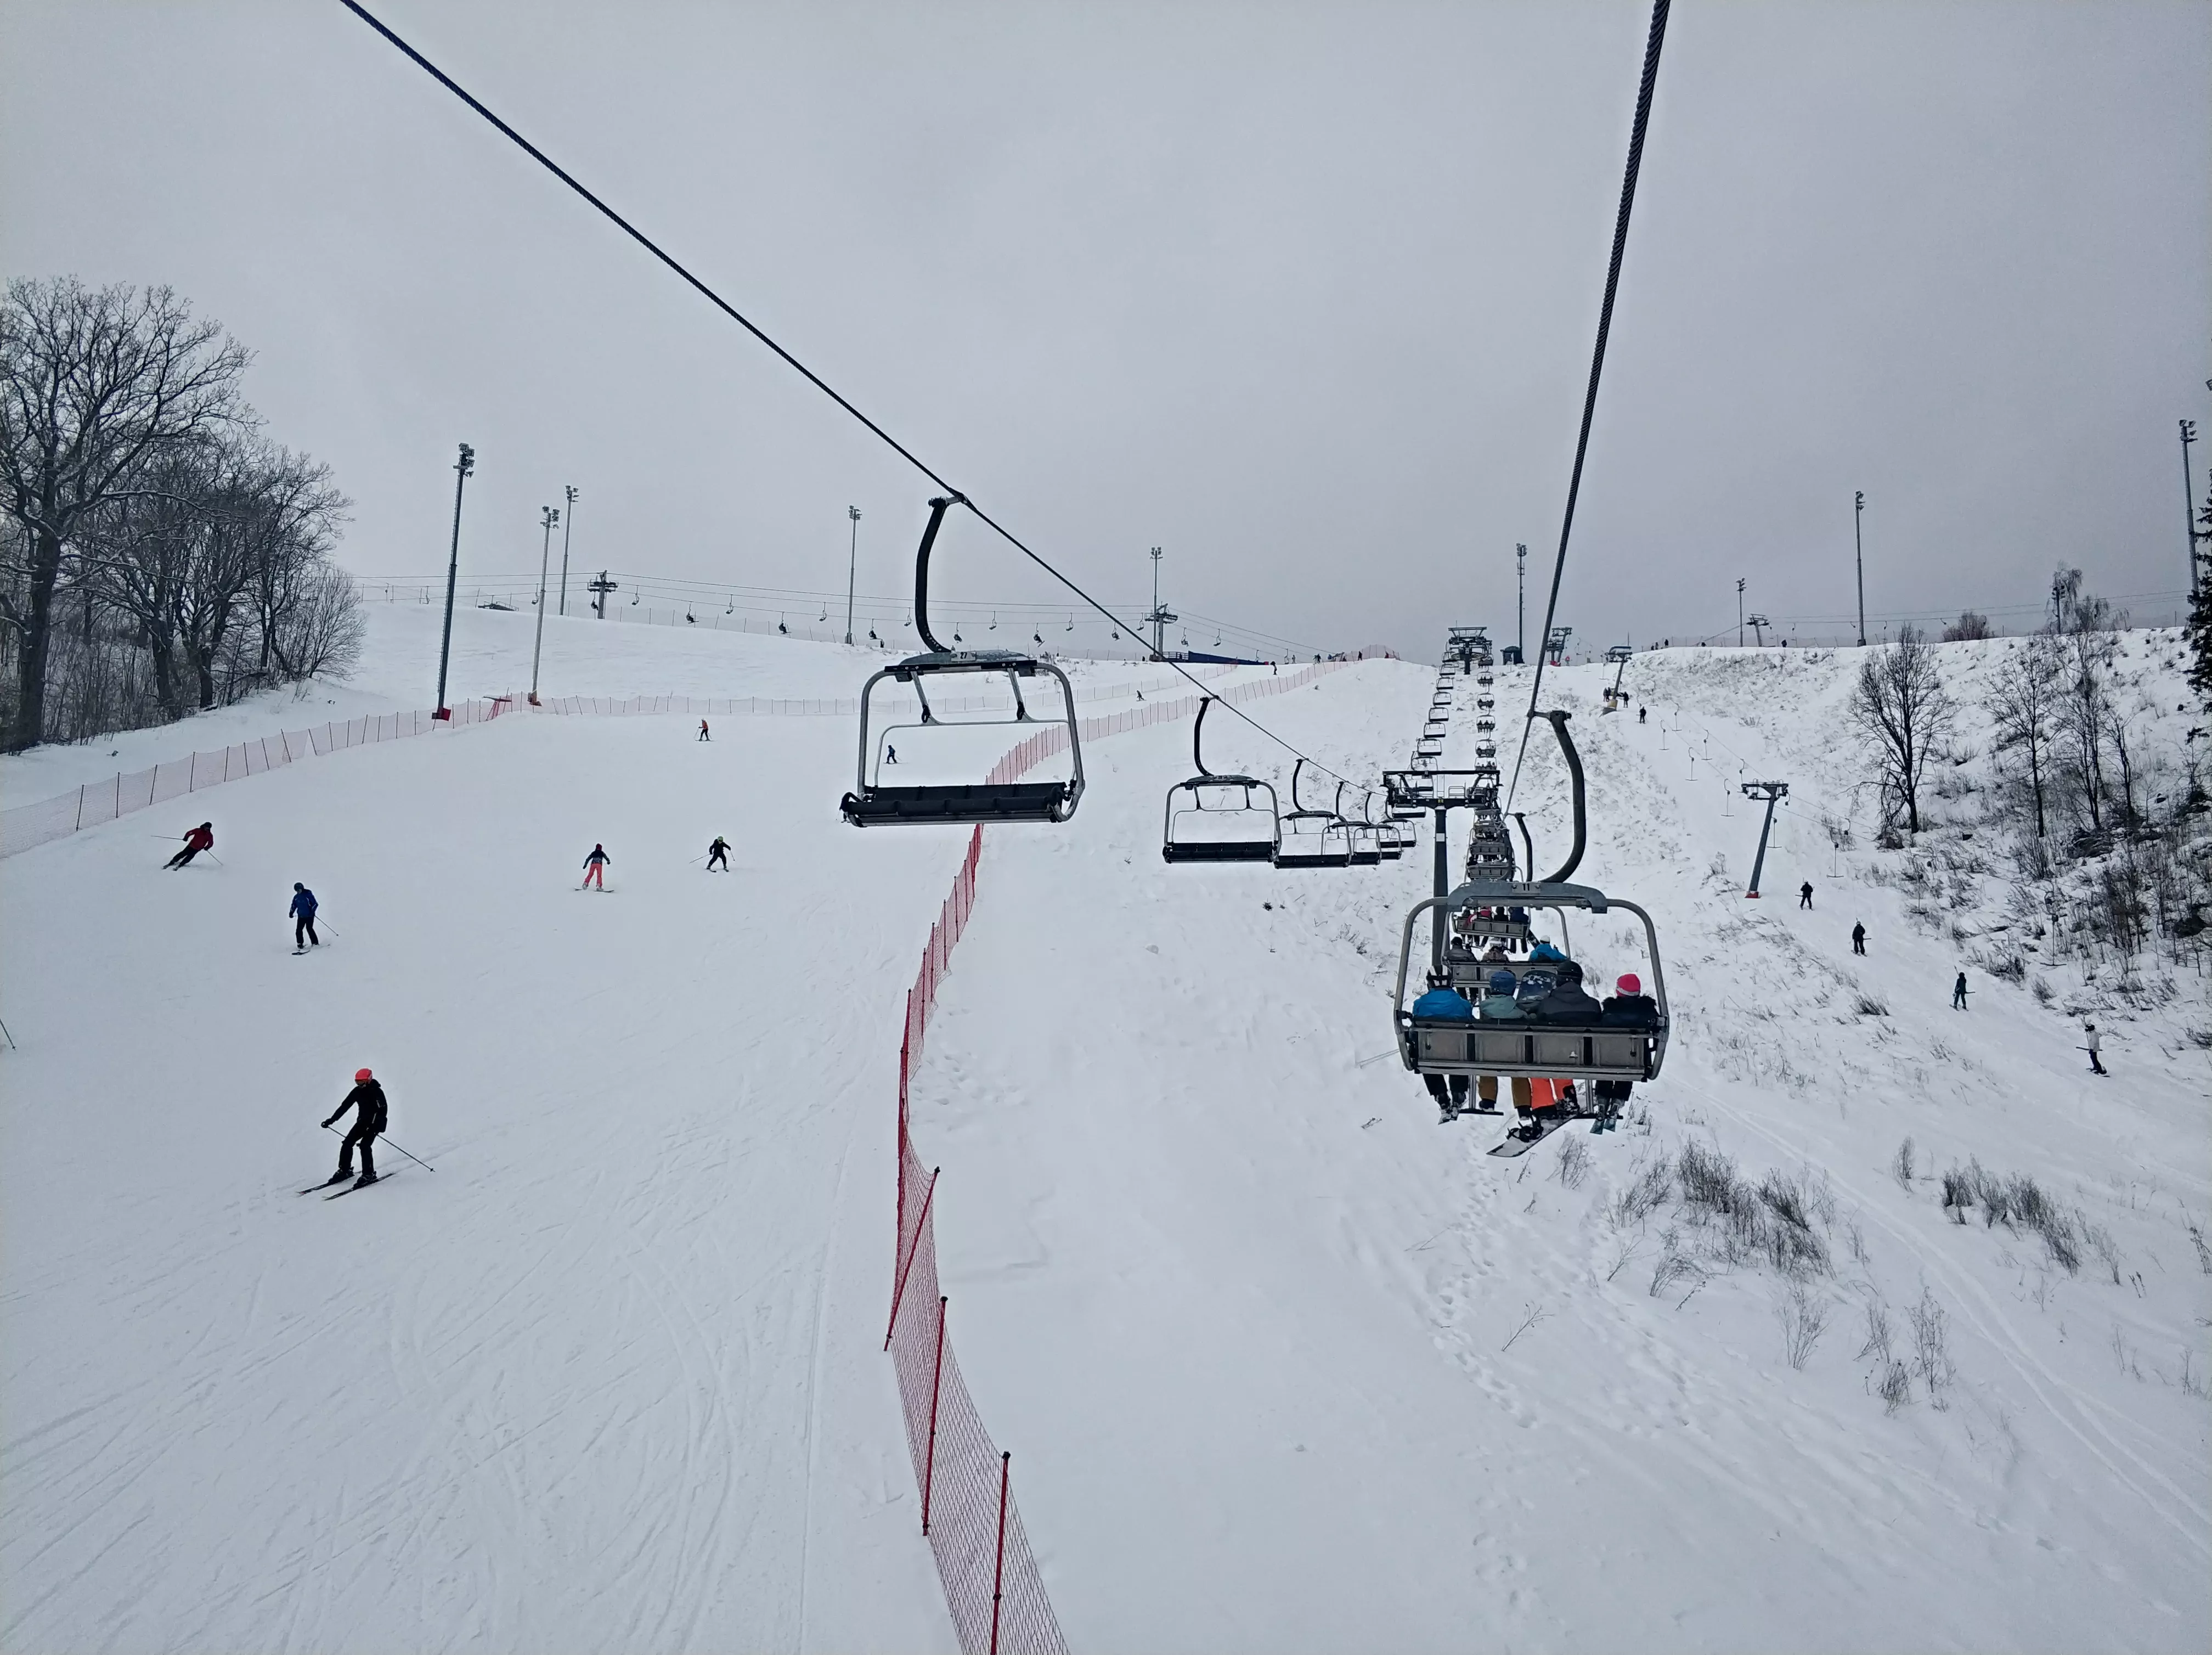 Sorochany in Russia, Europe | Snowboarding,Skiing - Rated 4.2